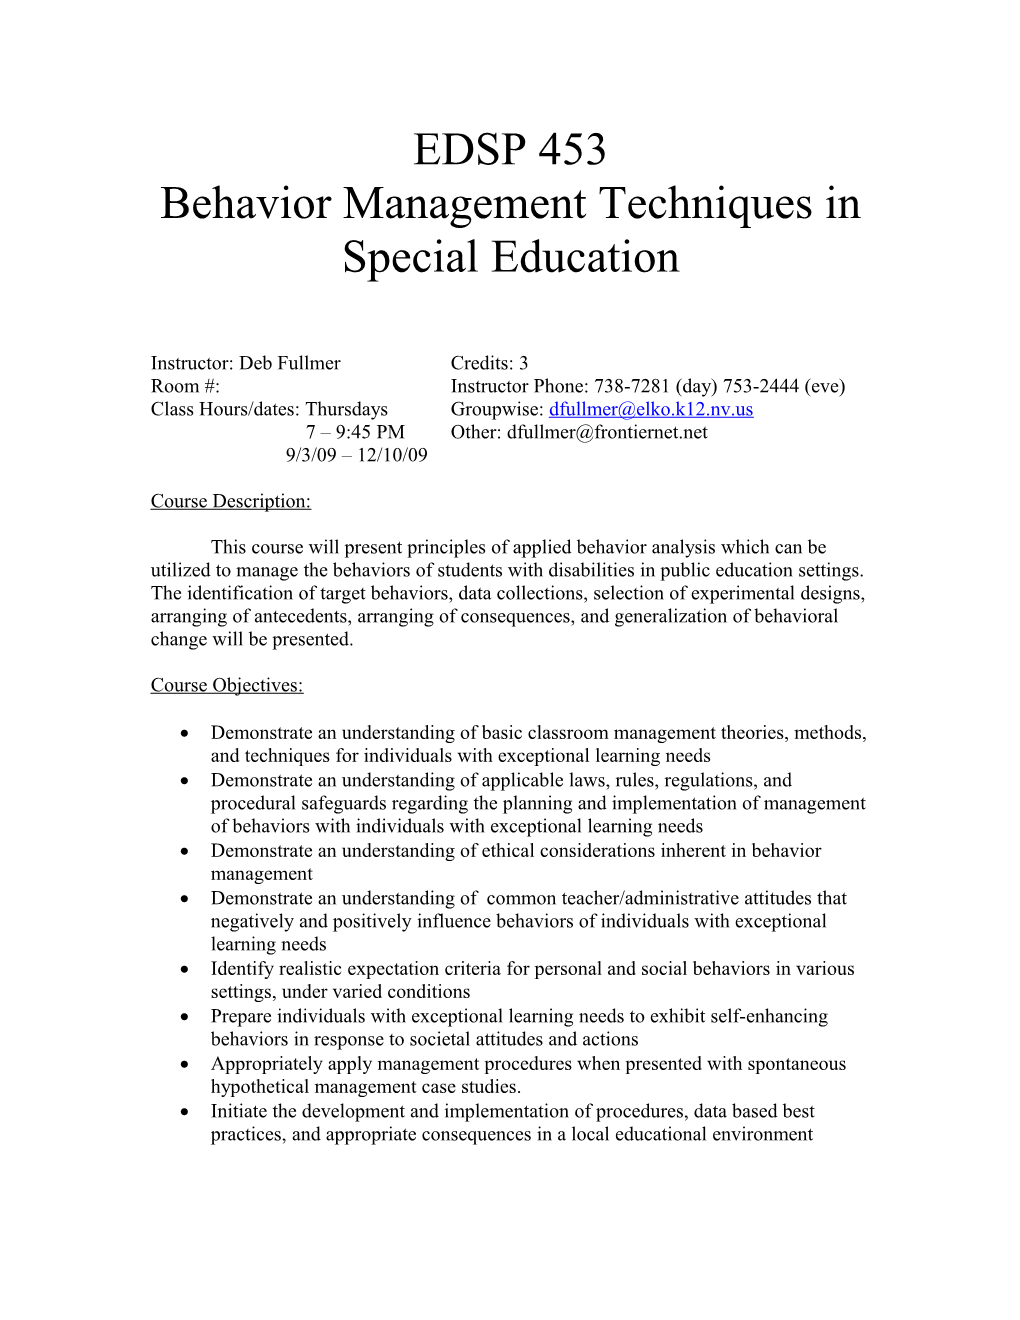 Behavior Management Techniques in Special Education